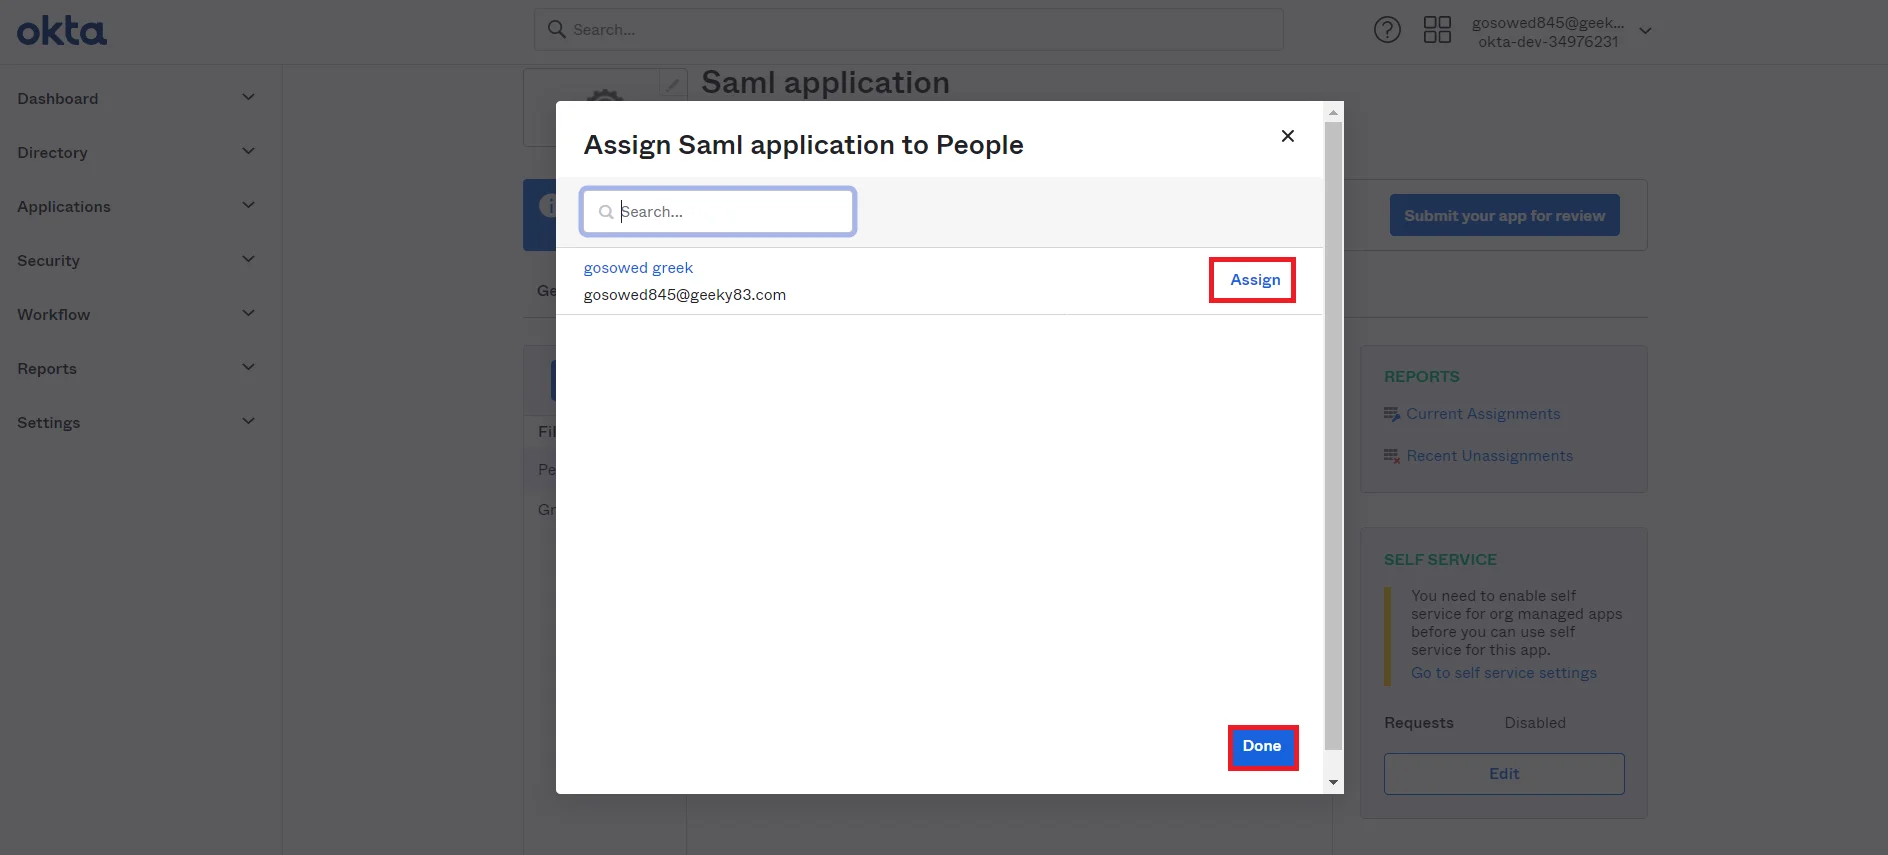 Okta SAML SSO Single Sign On into Joomla using Okta as Identity Provider(IdP), Okta Login - Assign_groups